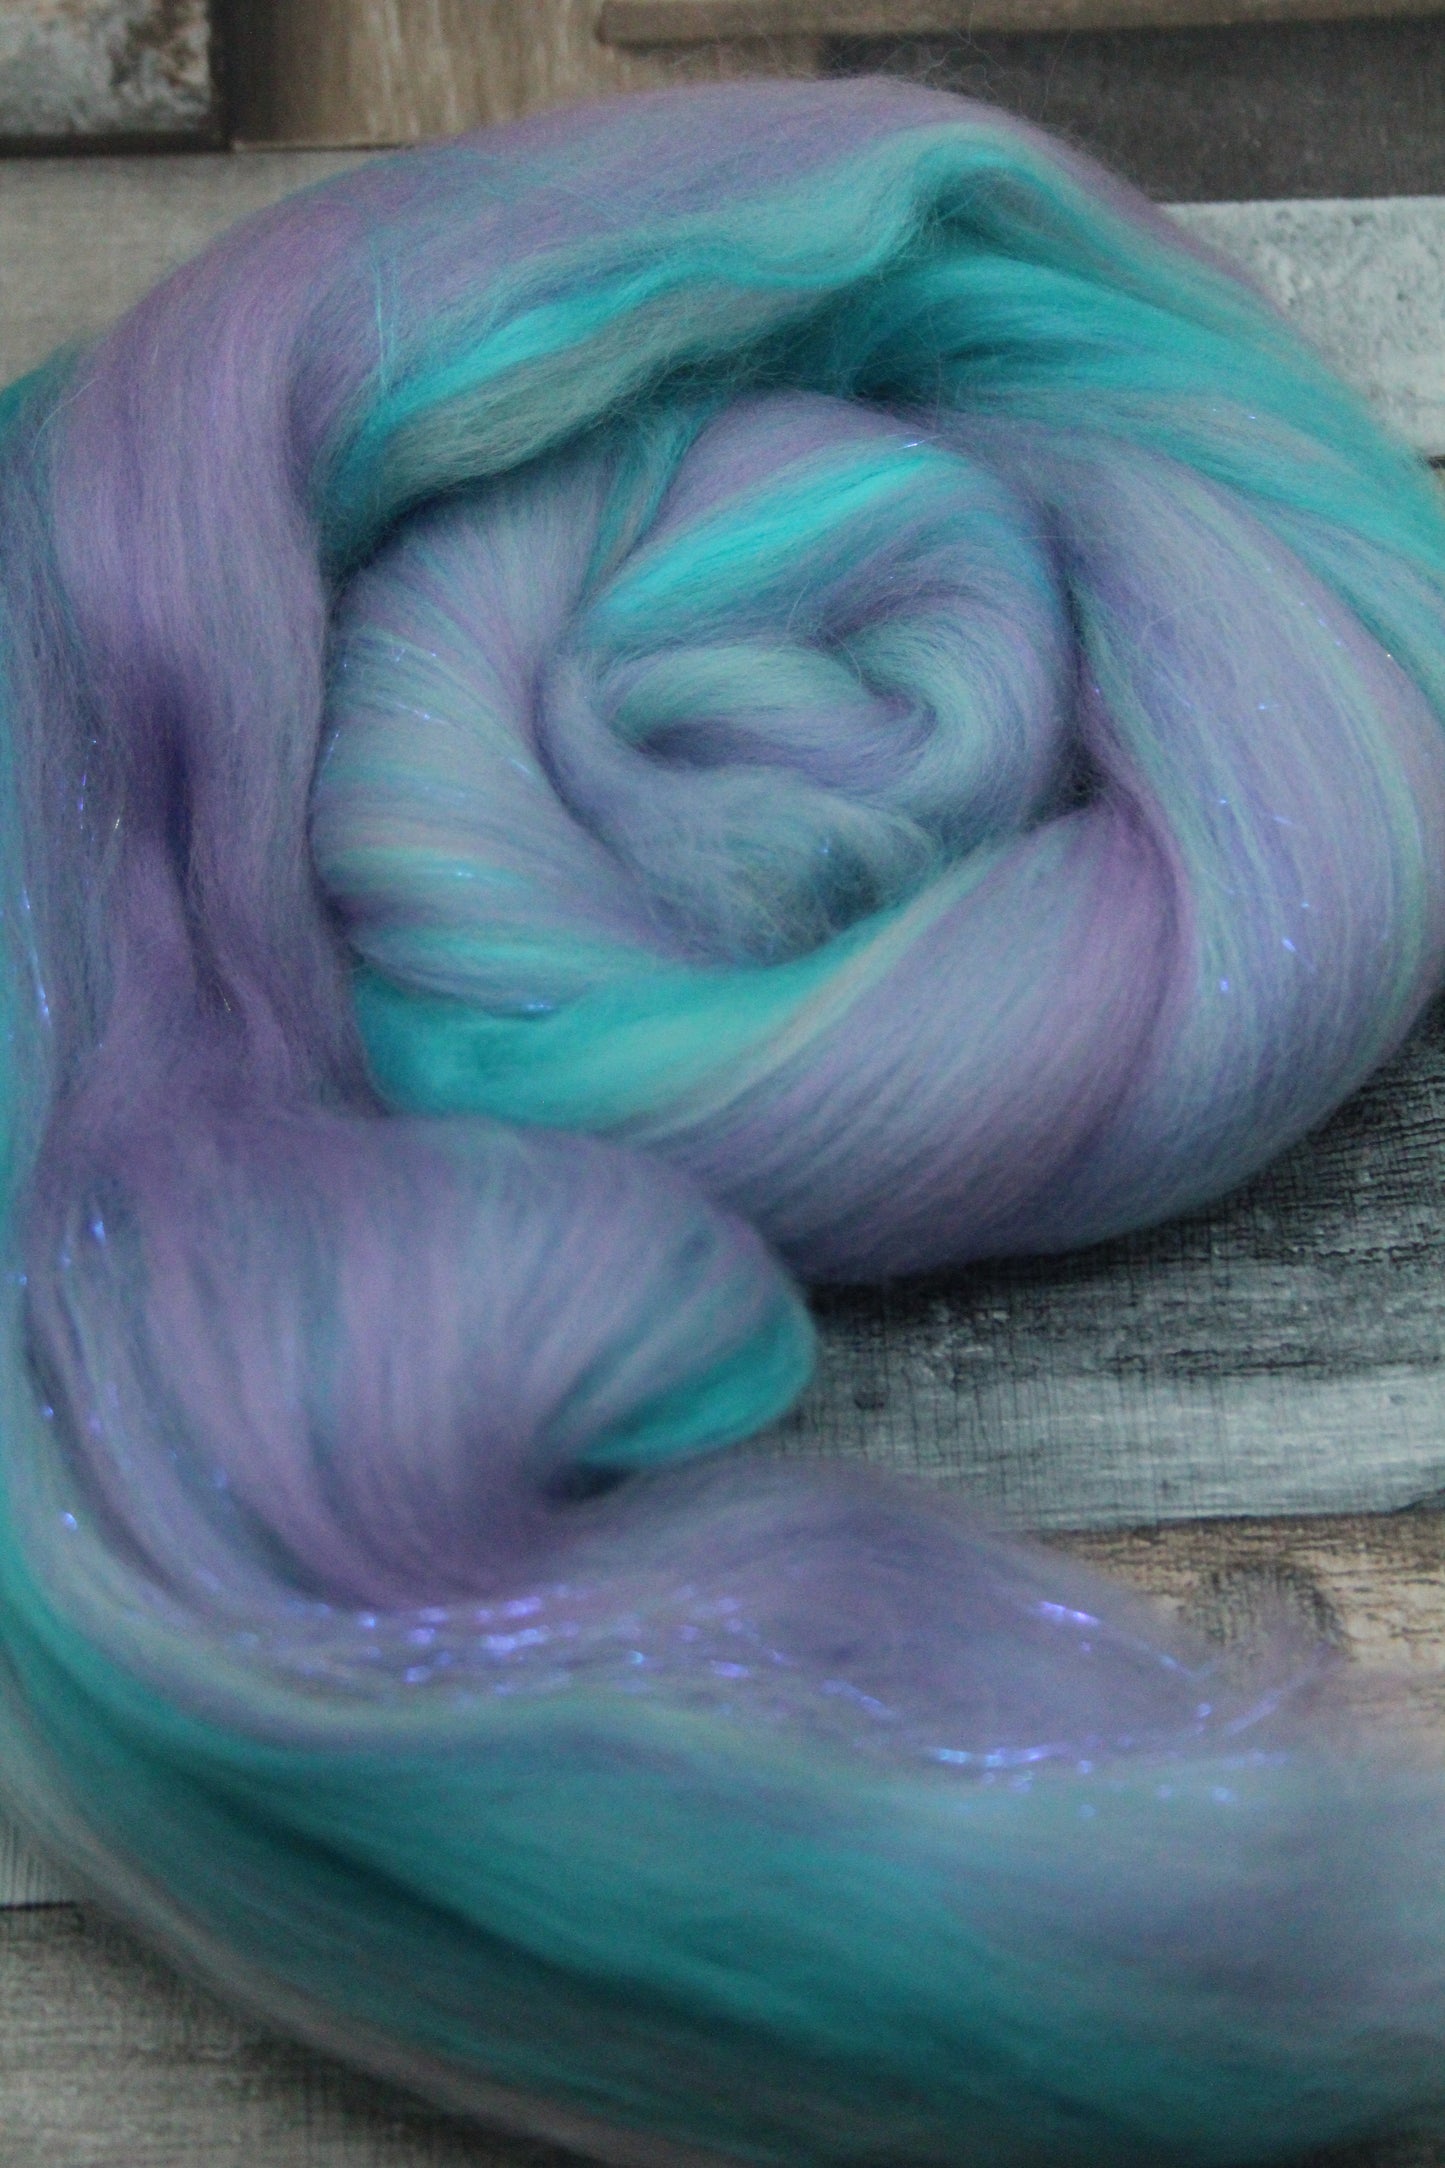 Merino Wool Blend - Purple Blue Pink - 24 grams / 0.8 oz  - Fibre for felting, weaving or spinning